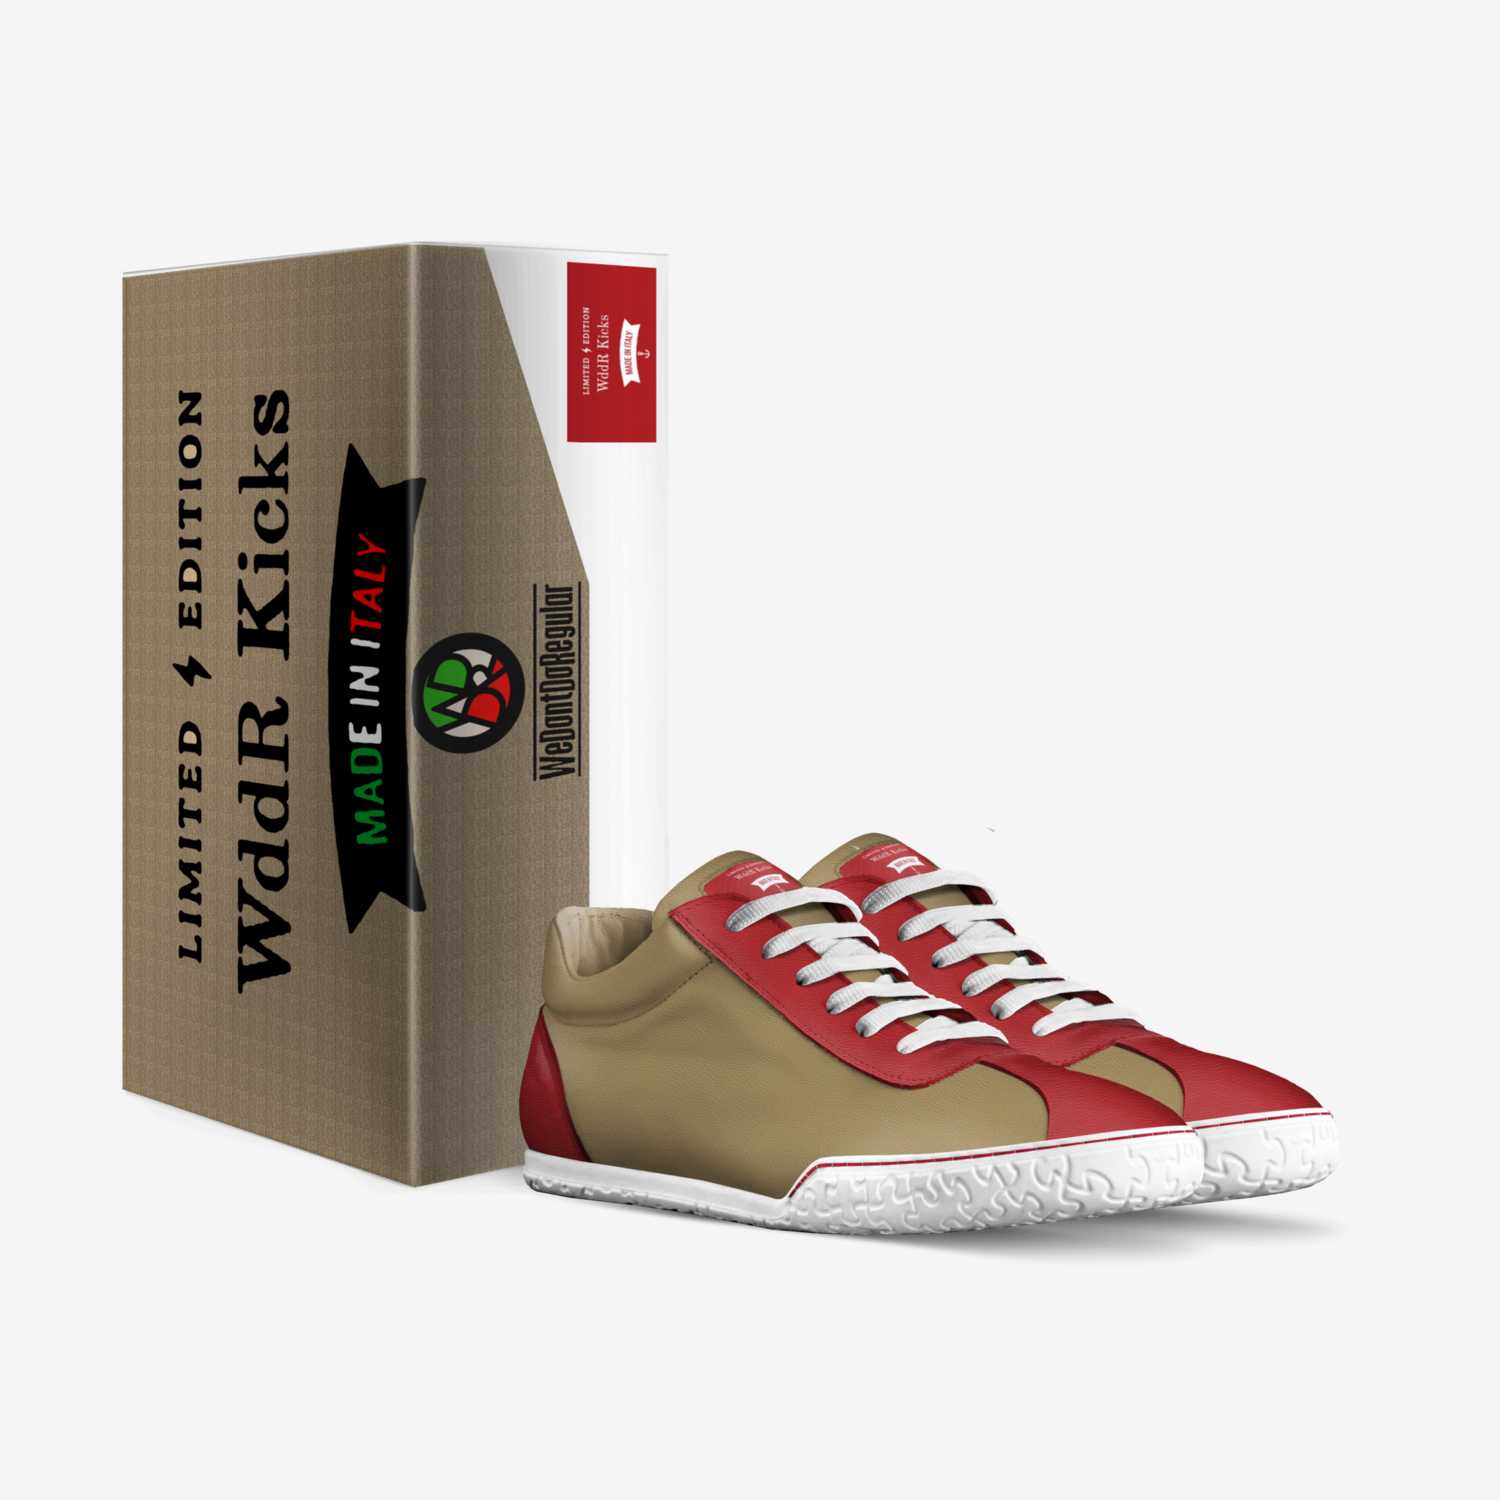 WddR Kicks custom made in Italy shoes by Scottie Ma'Valous | Box view